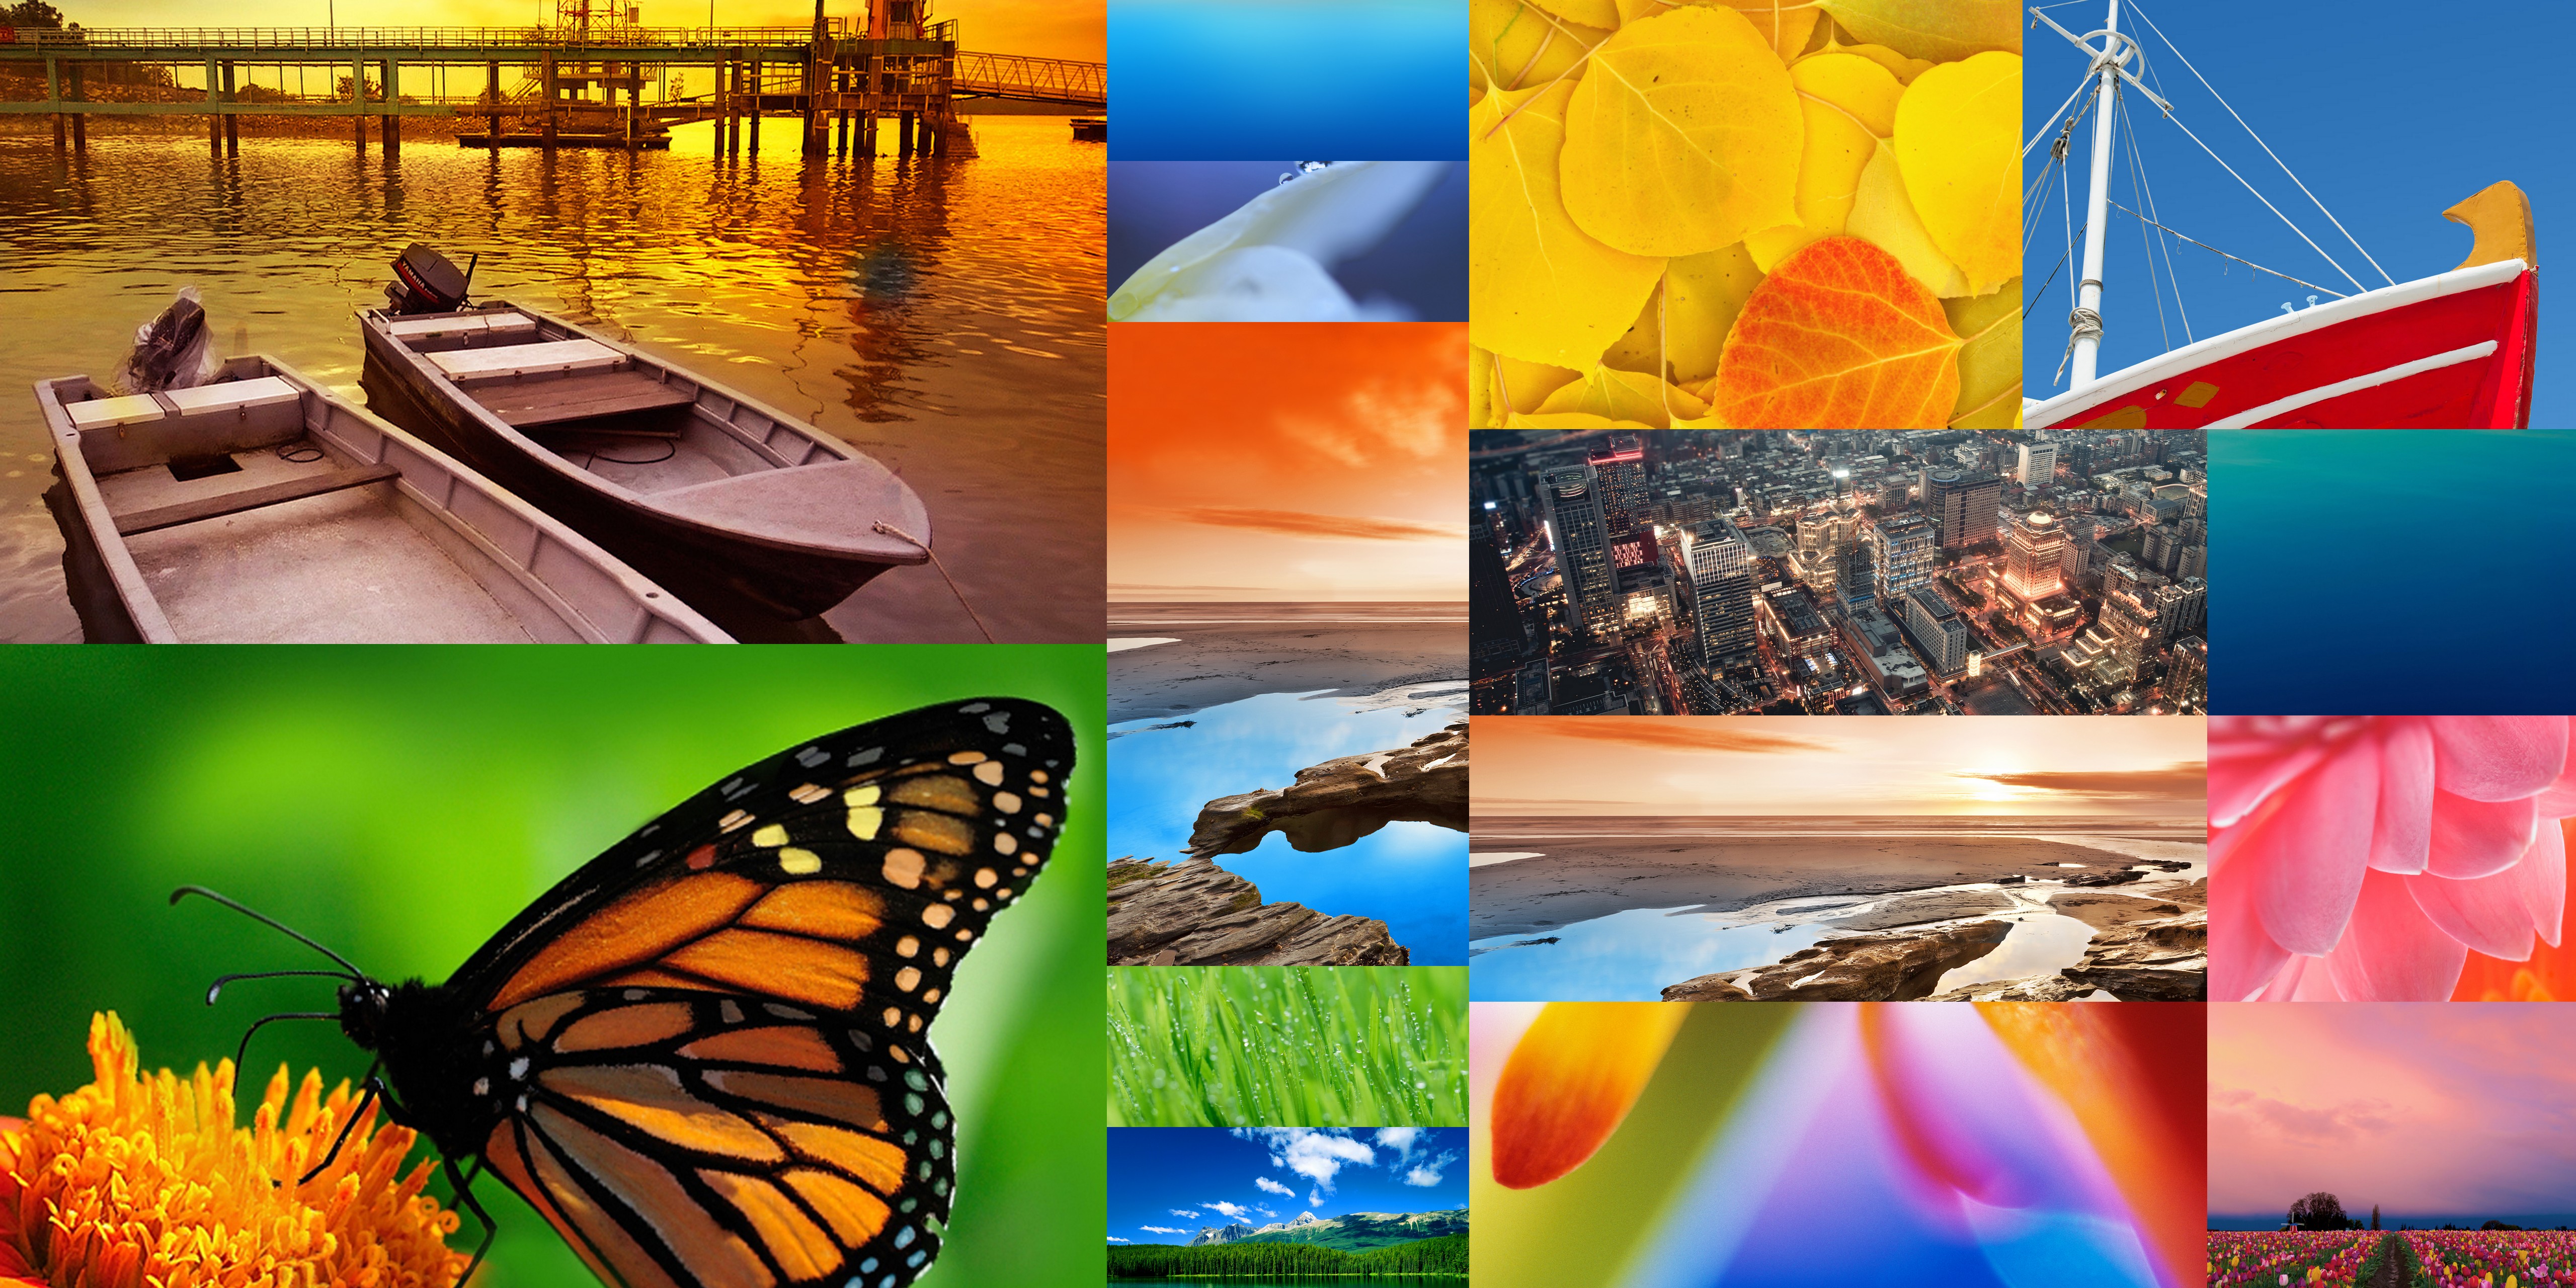 lenovo fondos de pantalla,mariposa,mariposa monarca,naturaleza,paisaje natural,polillas y mariposas